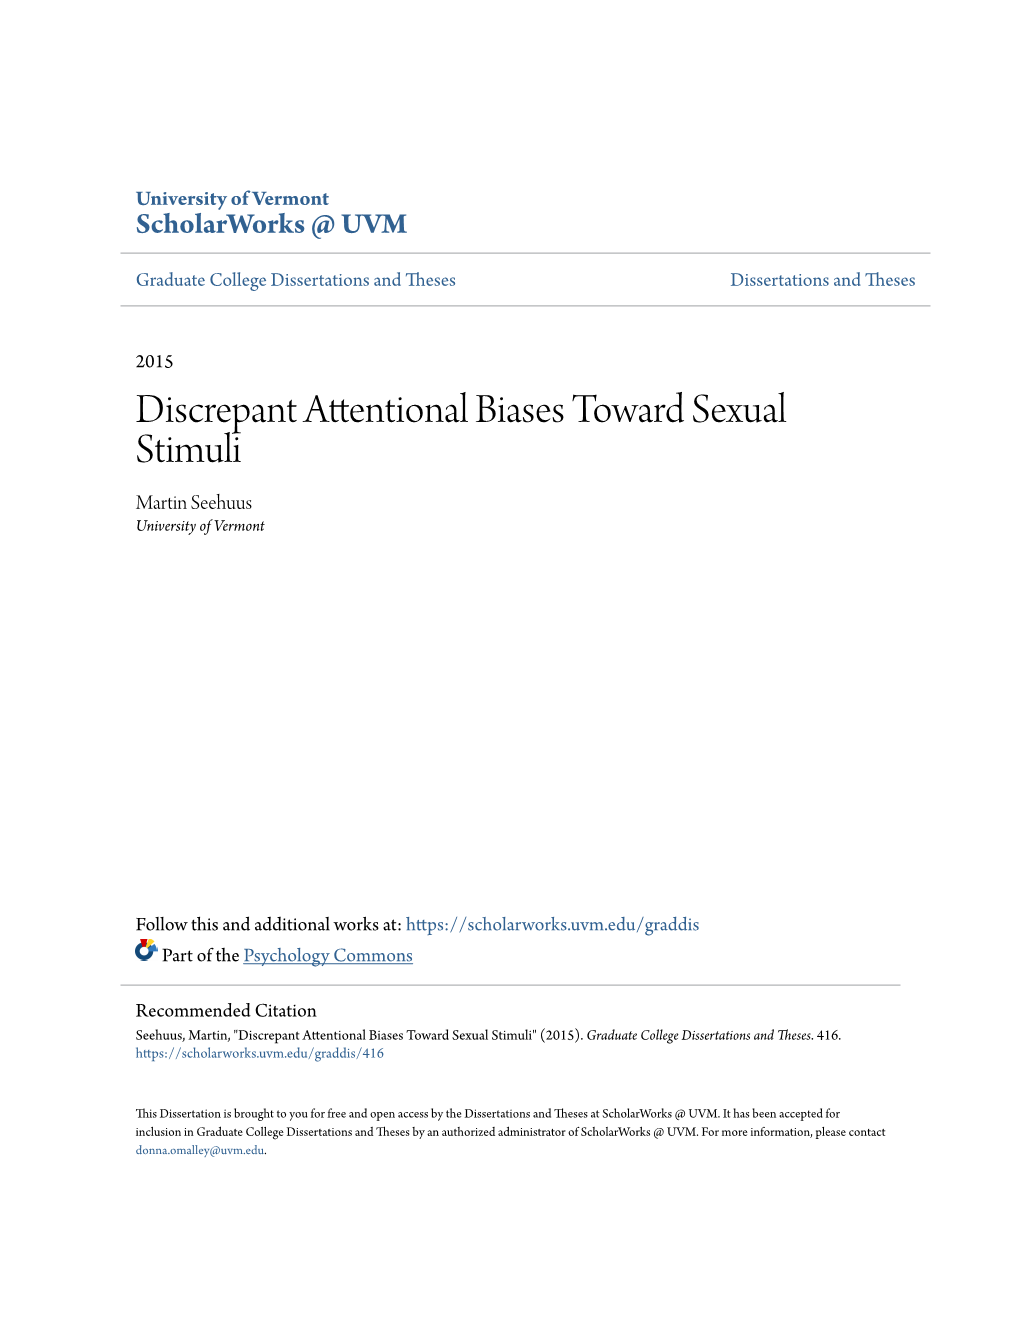 Discrepant Attentional Biases Toward Sexual Stimuli Martin Seehuus University of Vermont